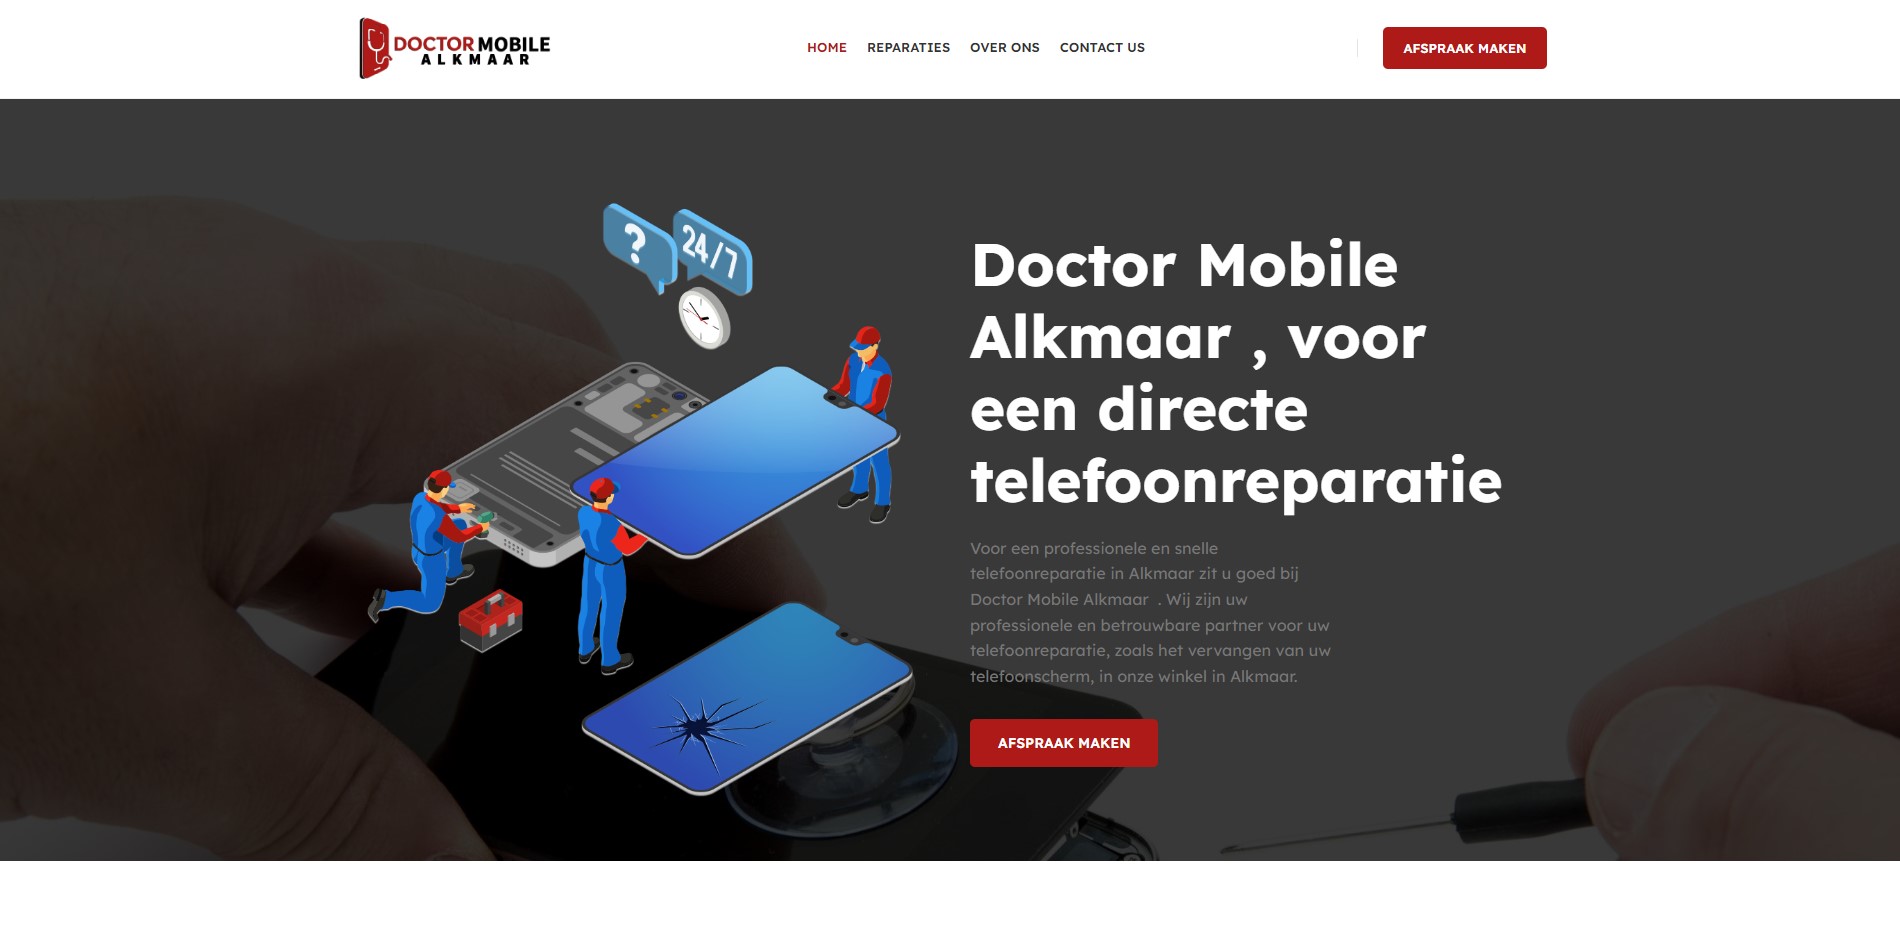 Doctor Mobile Alkmaar